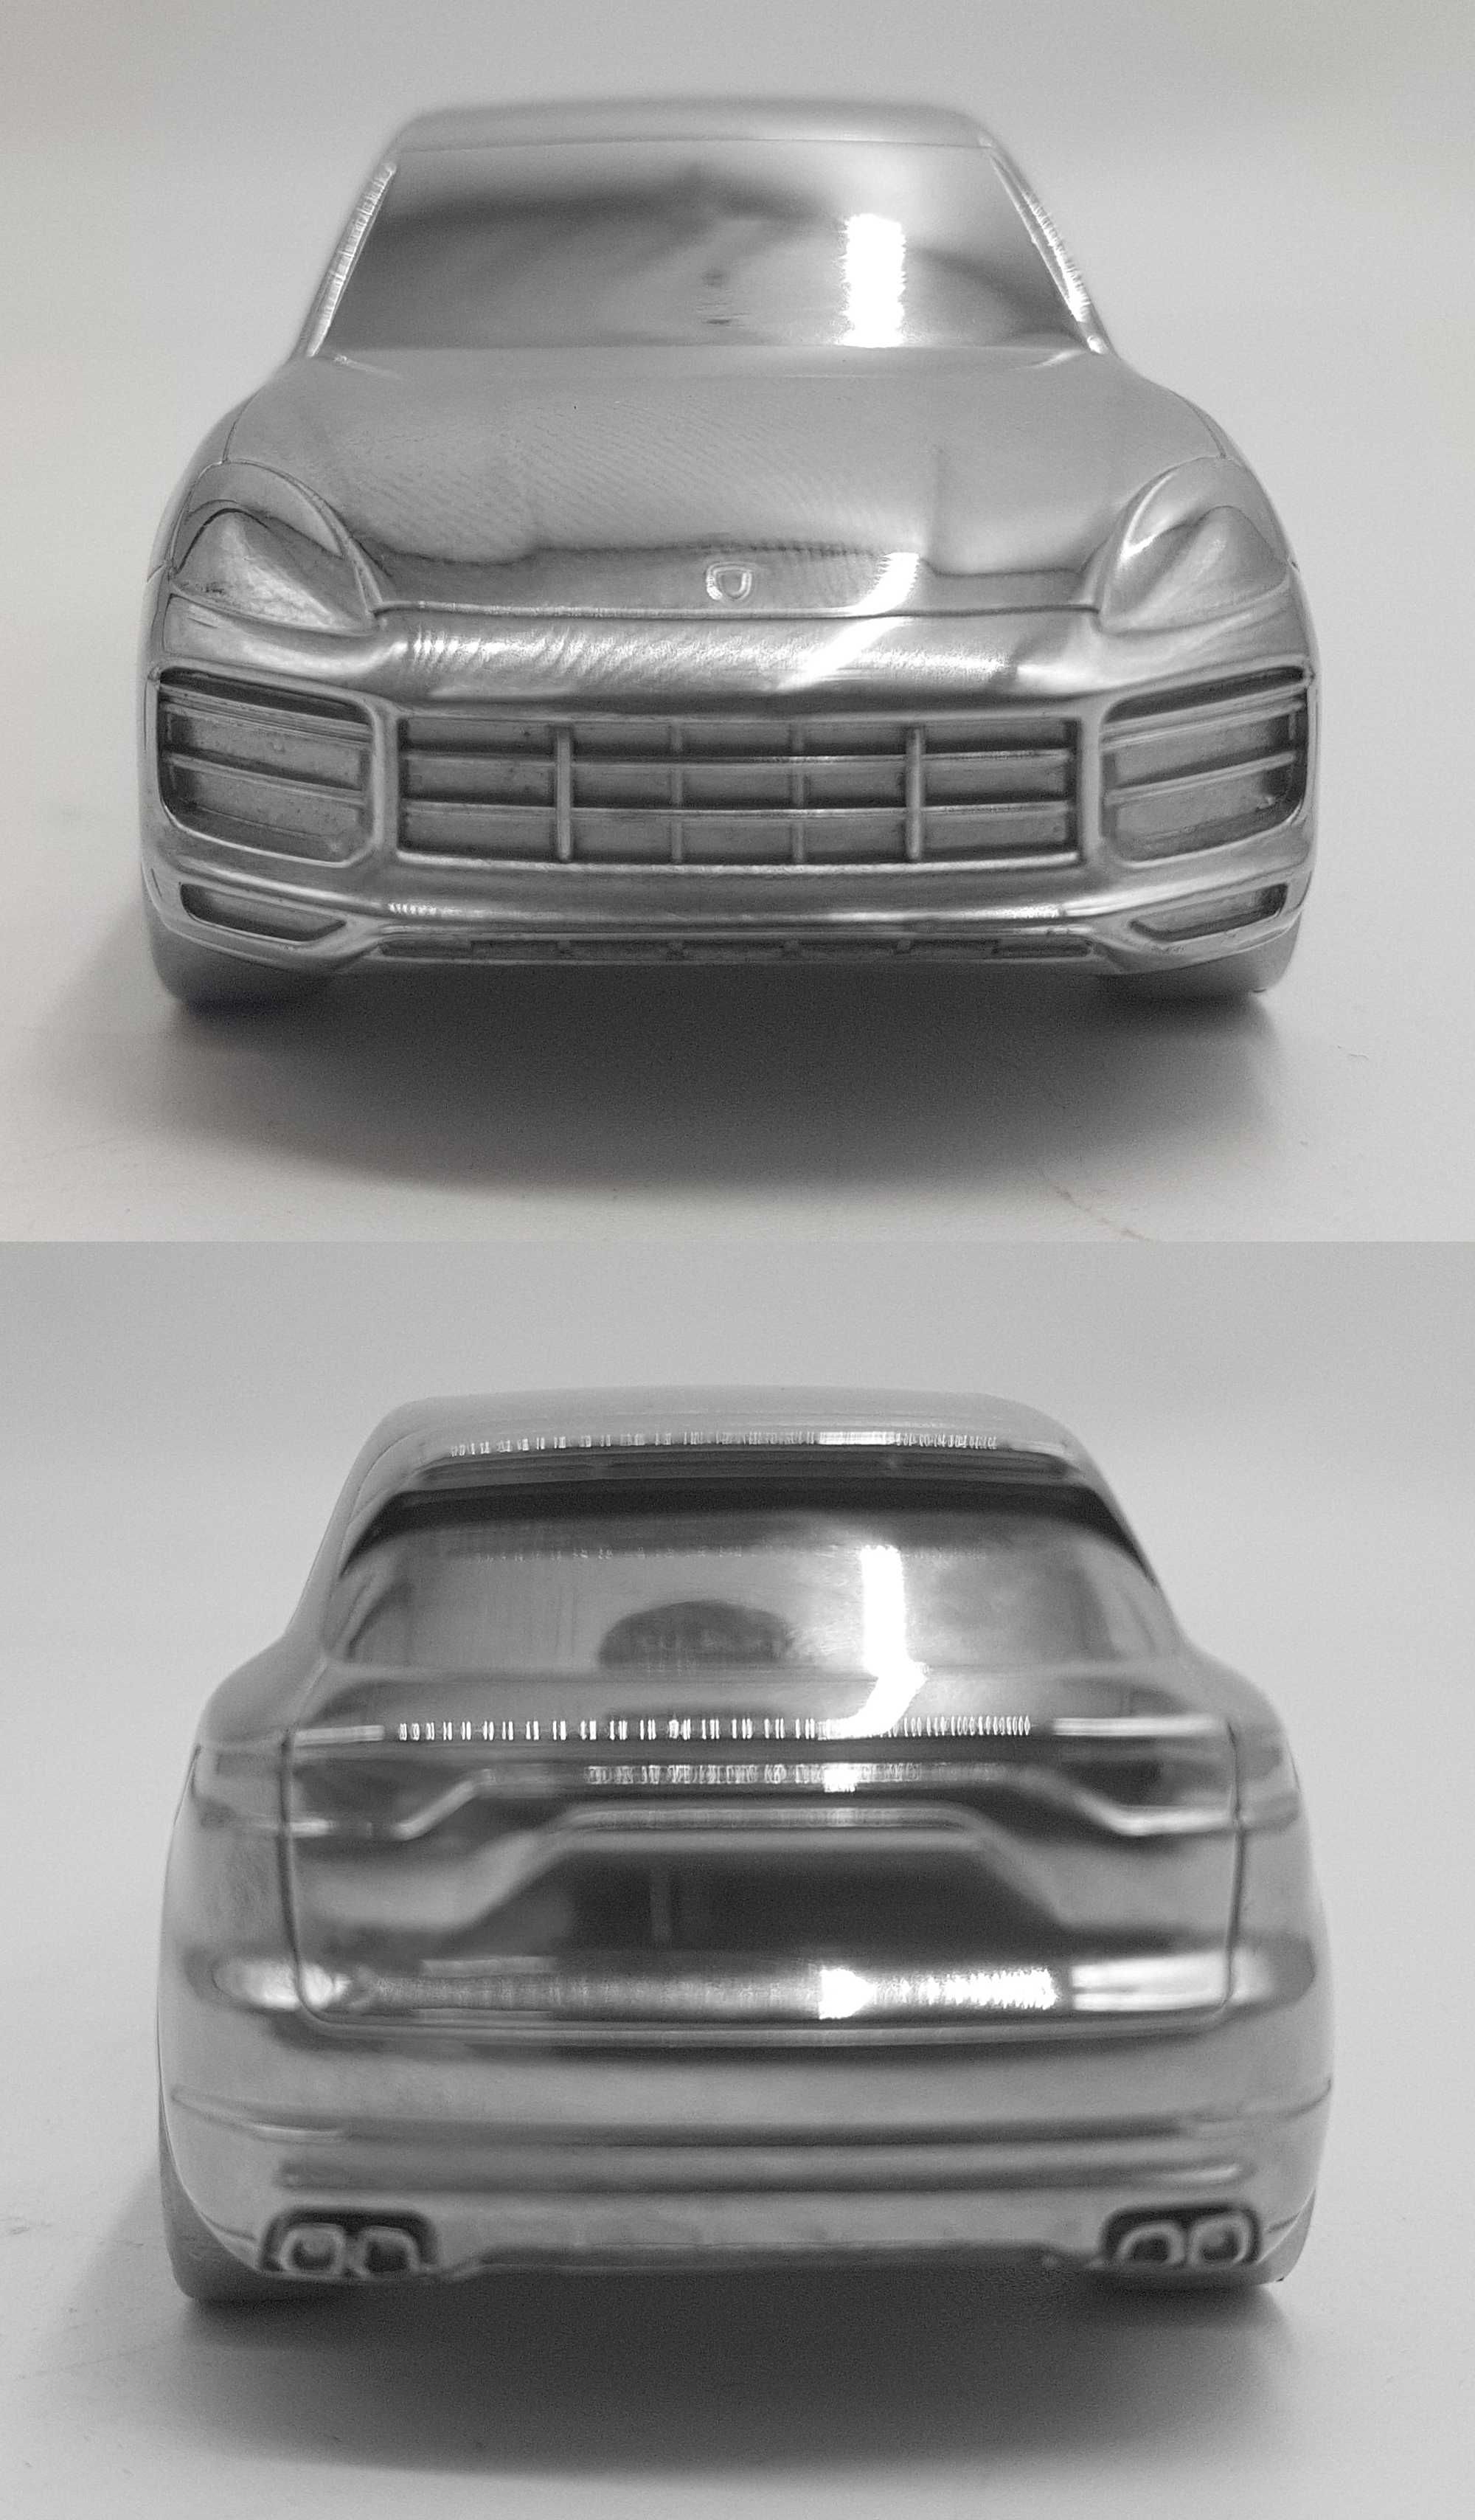 Porsche Cayenne Turbo edycja limitowana model aluminium